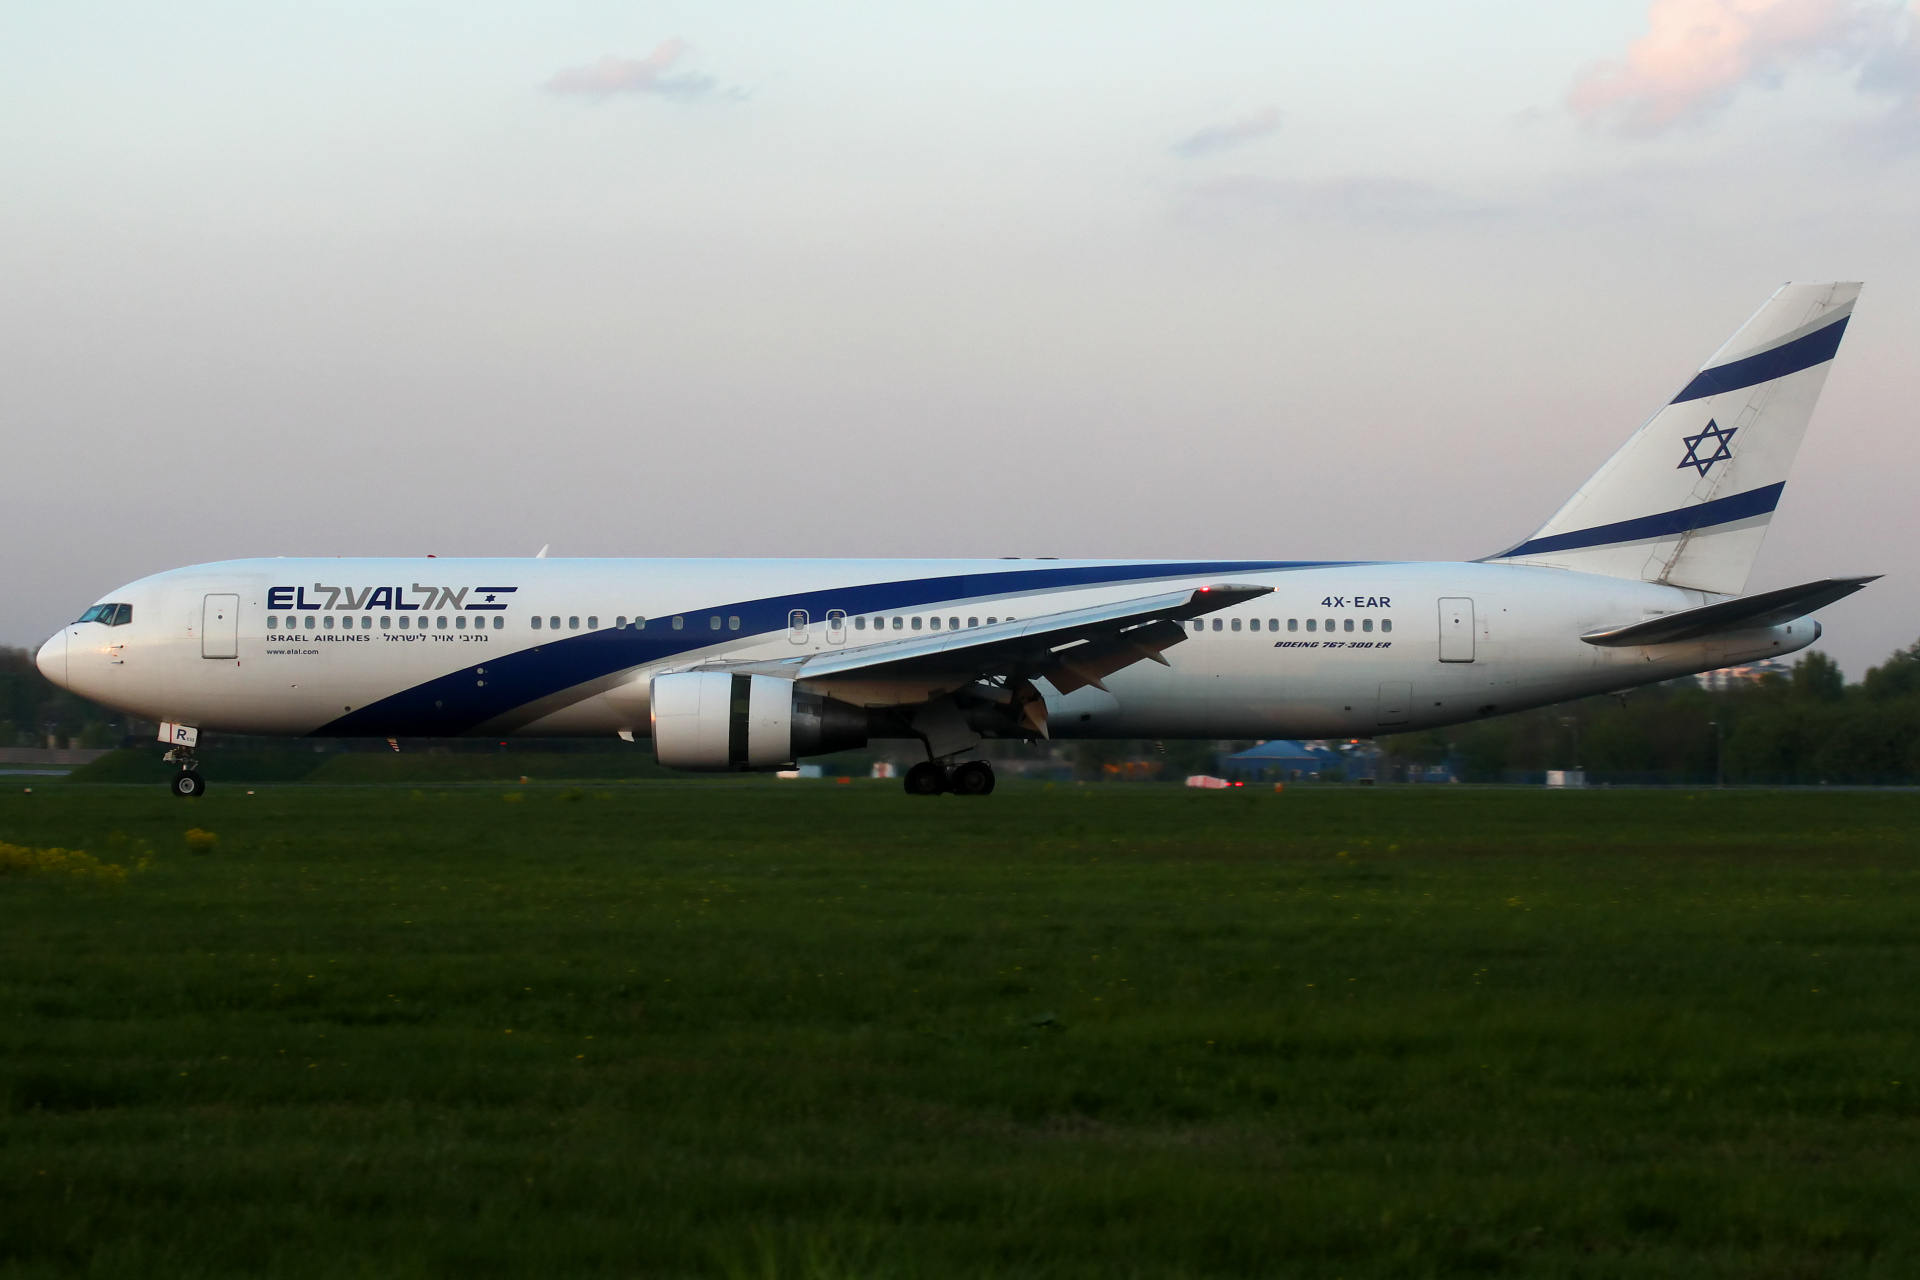 4X-EAR, El Al Israel Airlines (Aircraft » EPWA Spotting » Boeing 767-300)